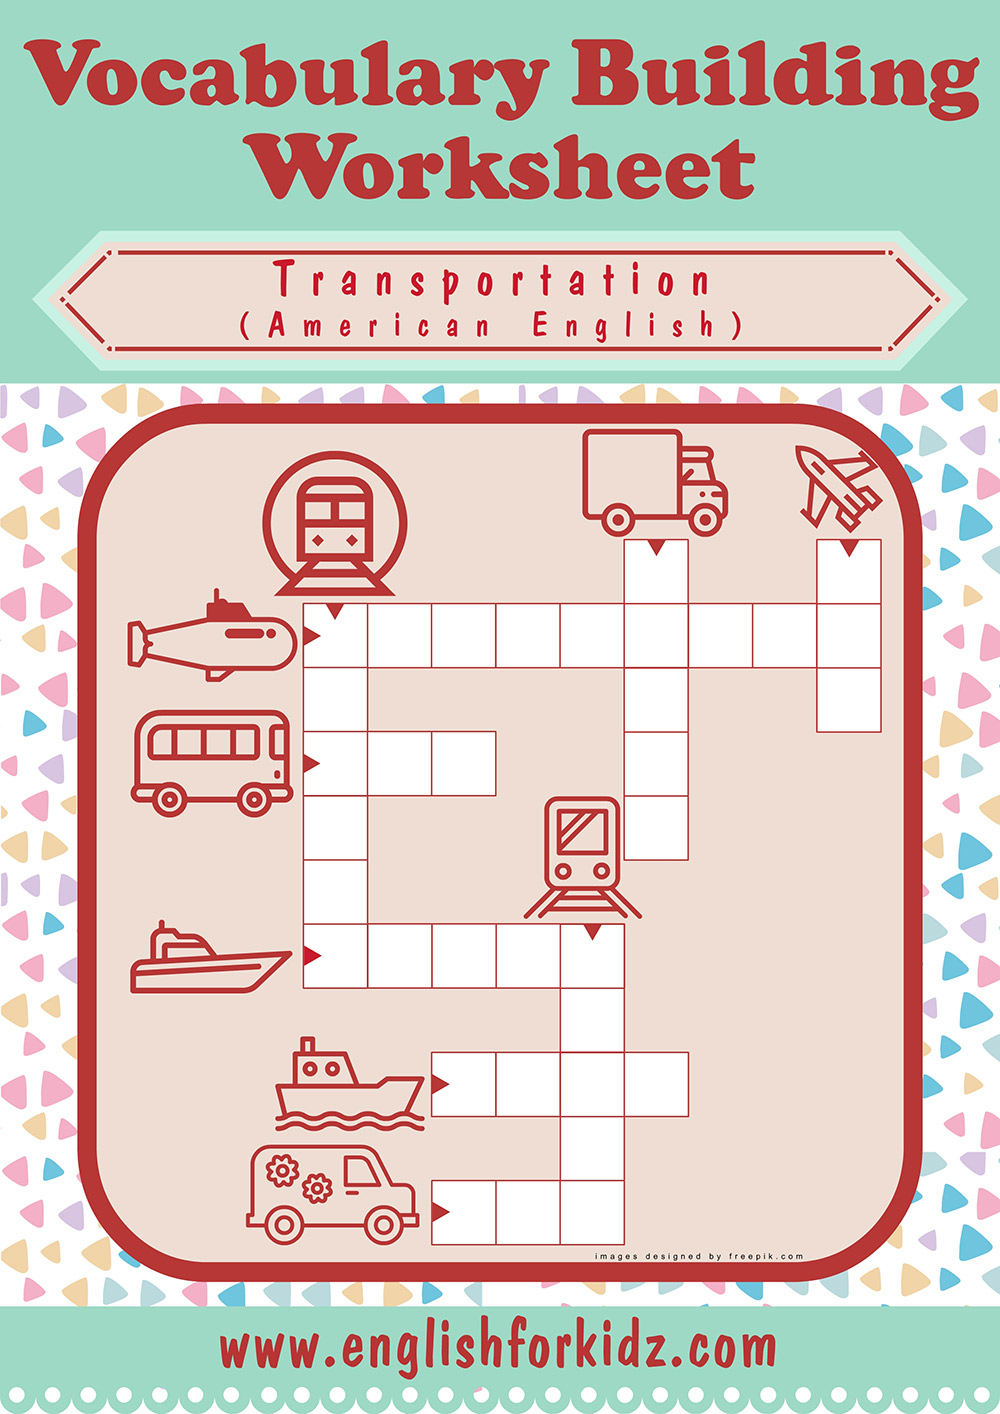 Transportation Worksheets: Crossword Puzzles - Printable Transportation Puzzles